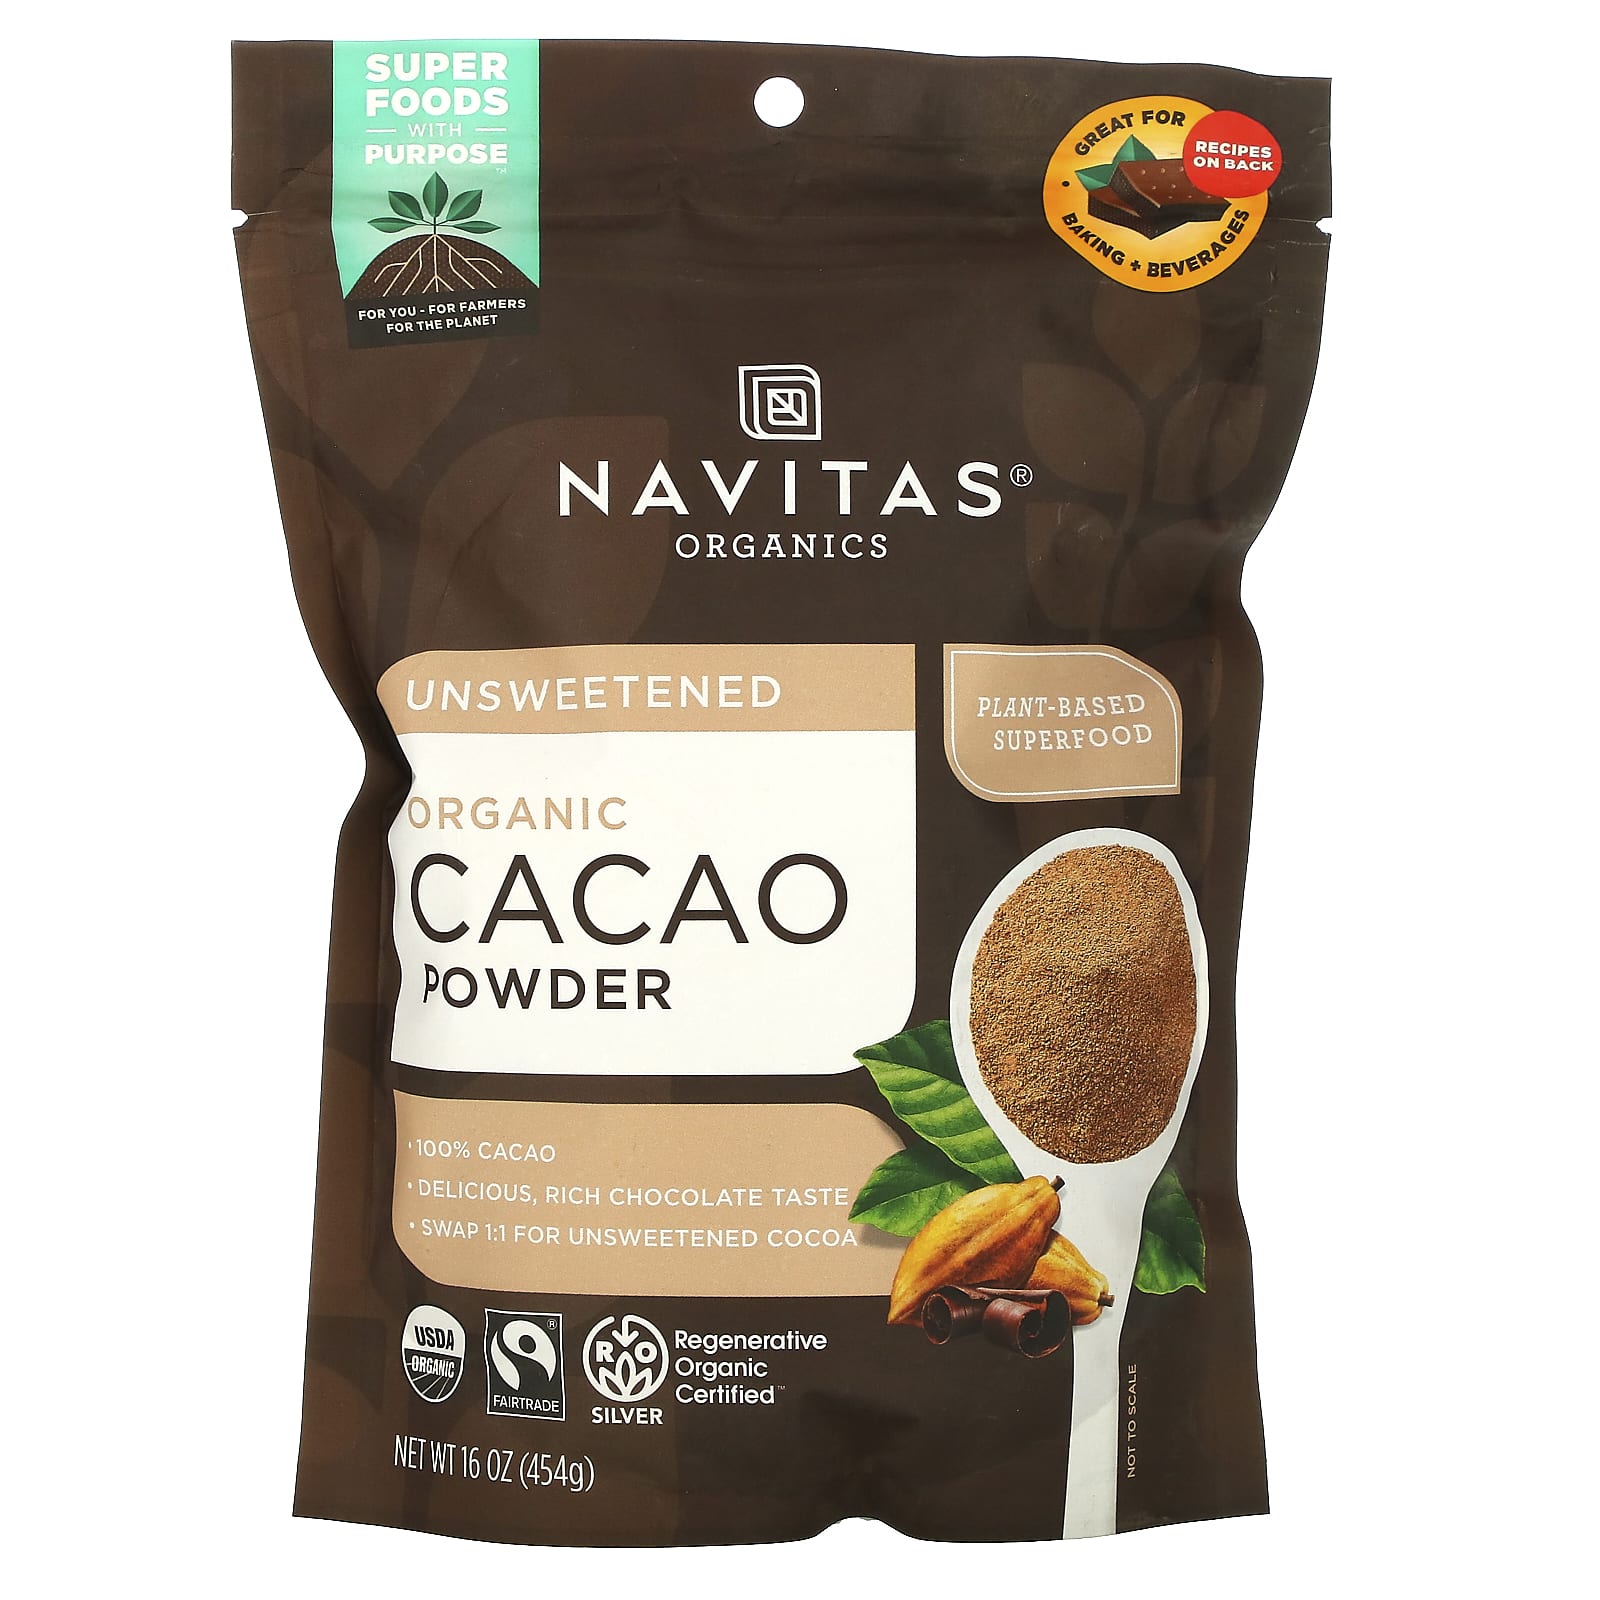 Navitas Organics Органический порошок какао 16 унц. (454 г) earth circle organics сырой органический порошок маки 454 г 16 унций